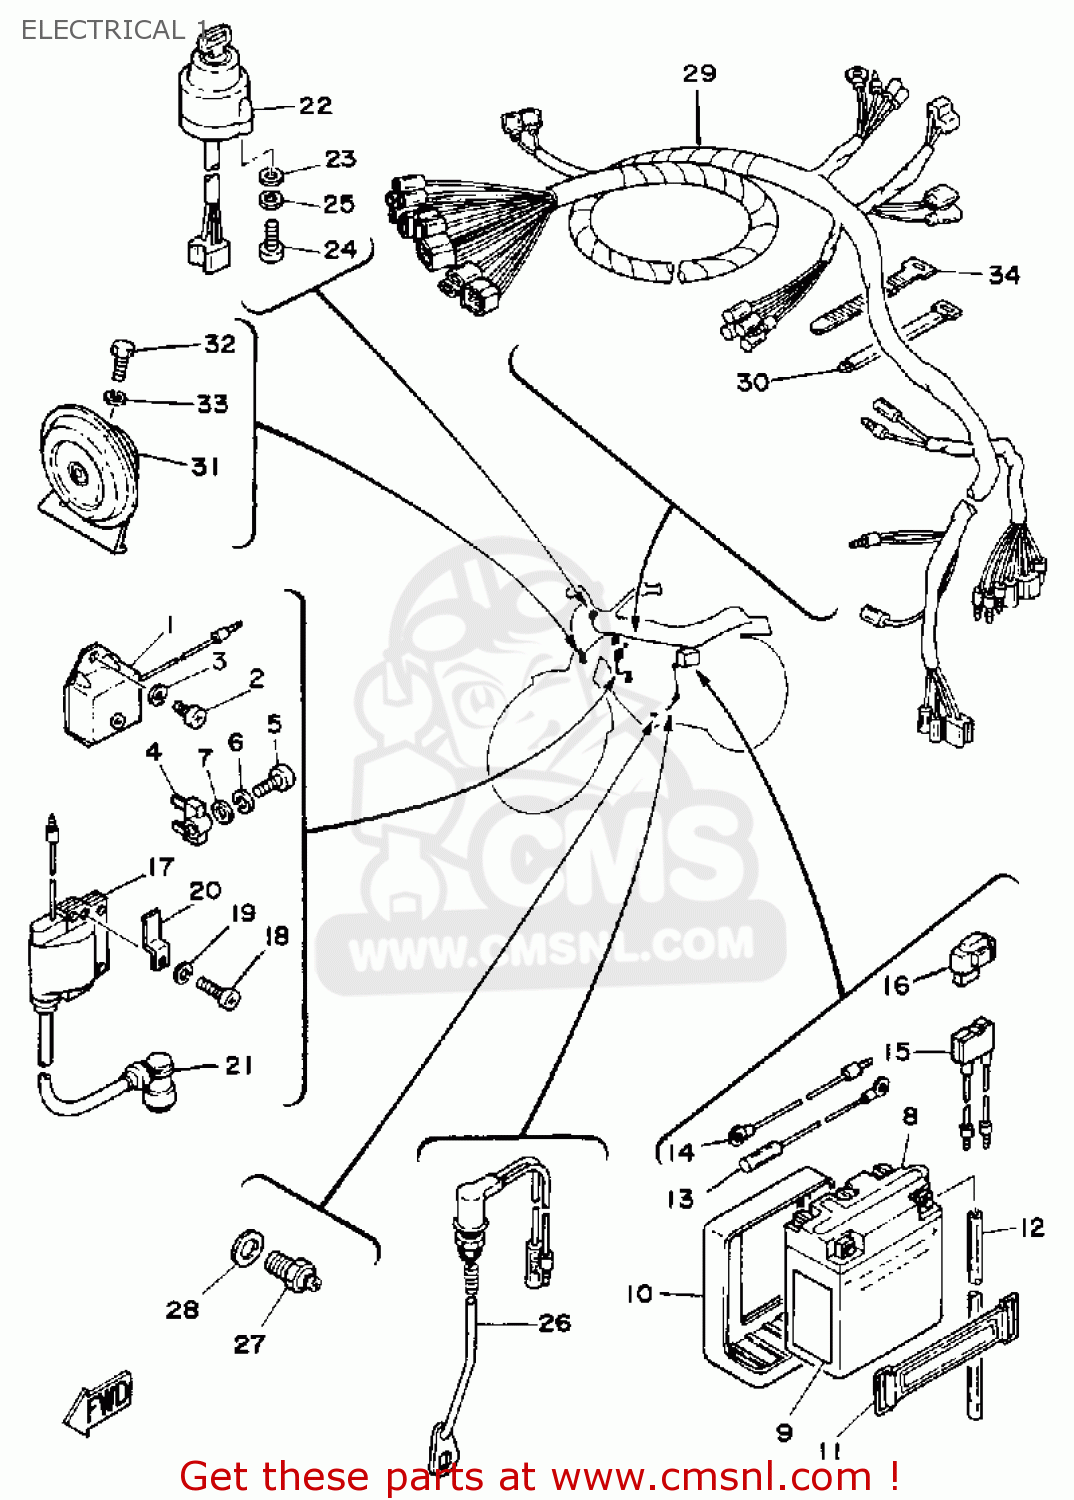 wiring diagram usbc coloring